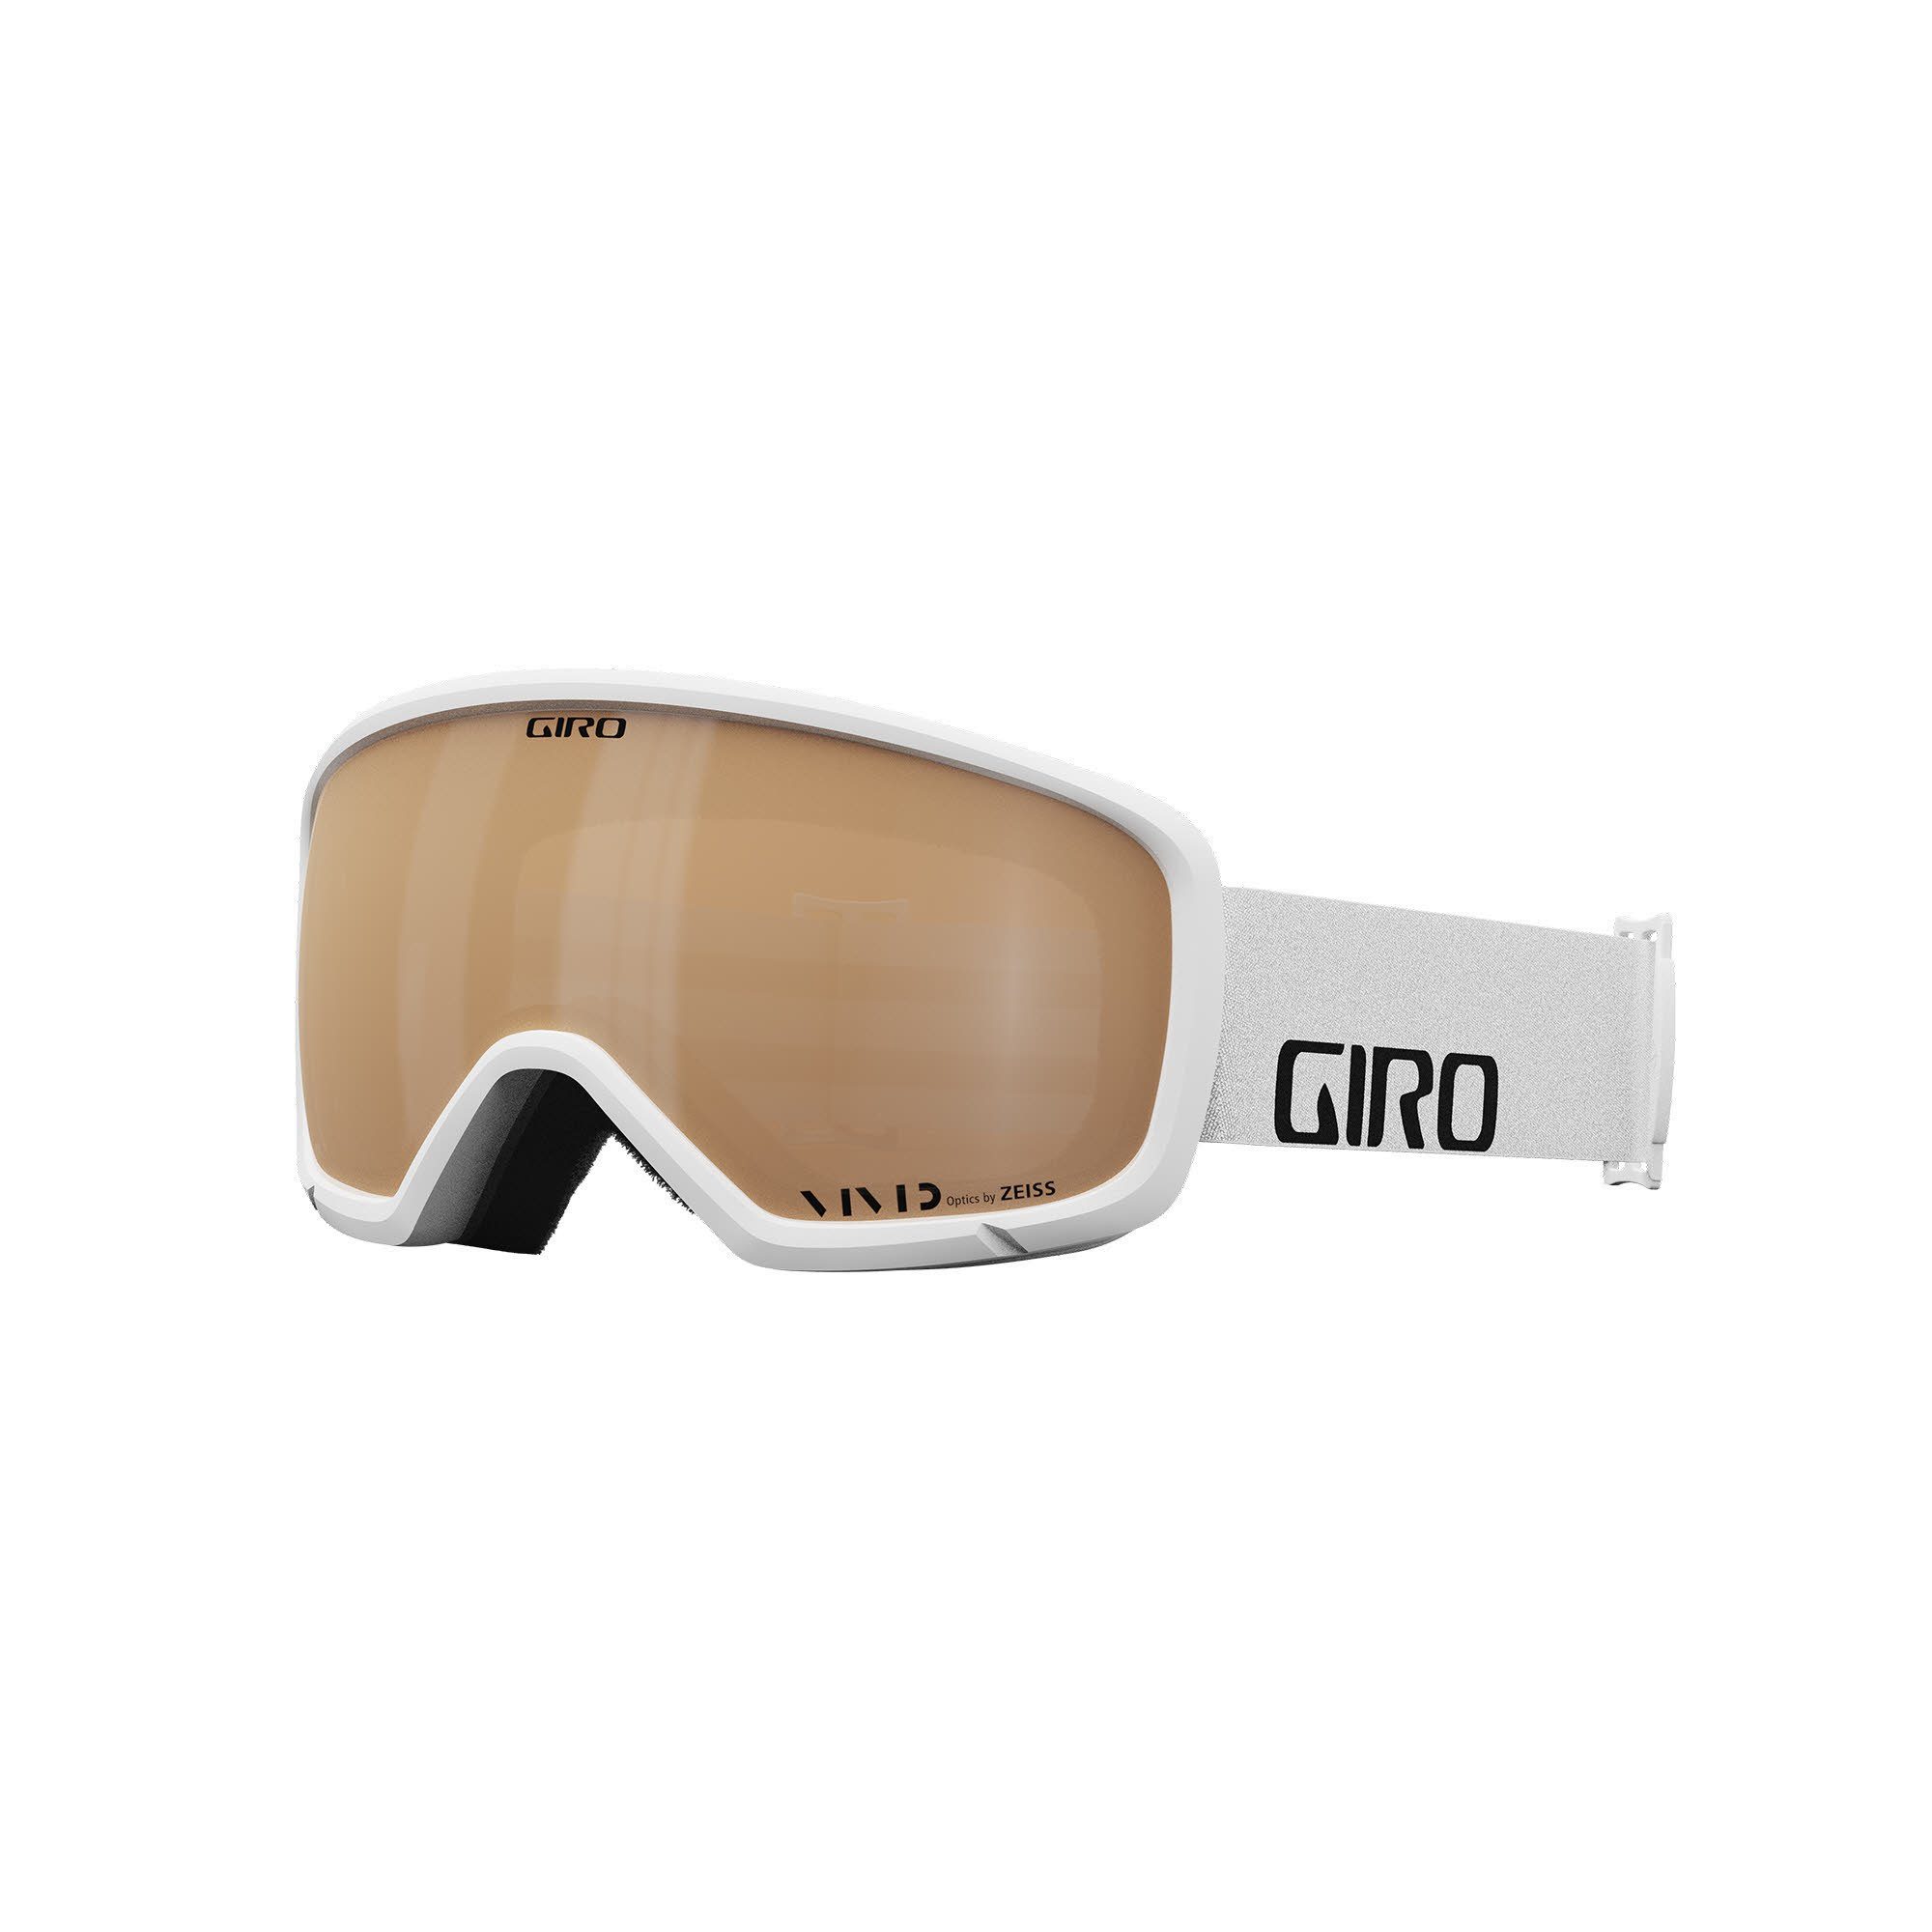 Giro Skibrille weiss (10)